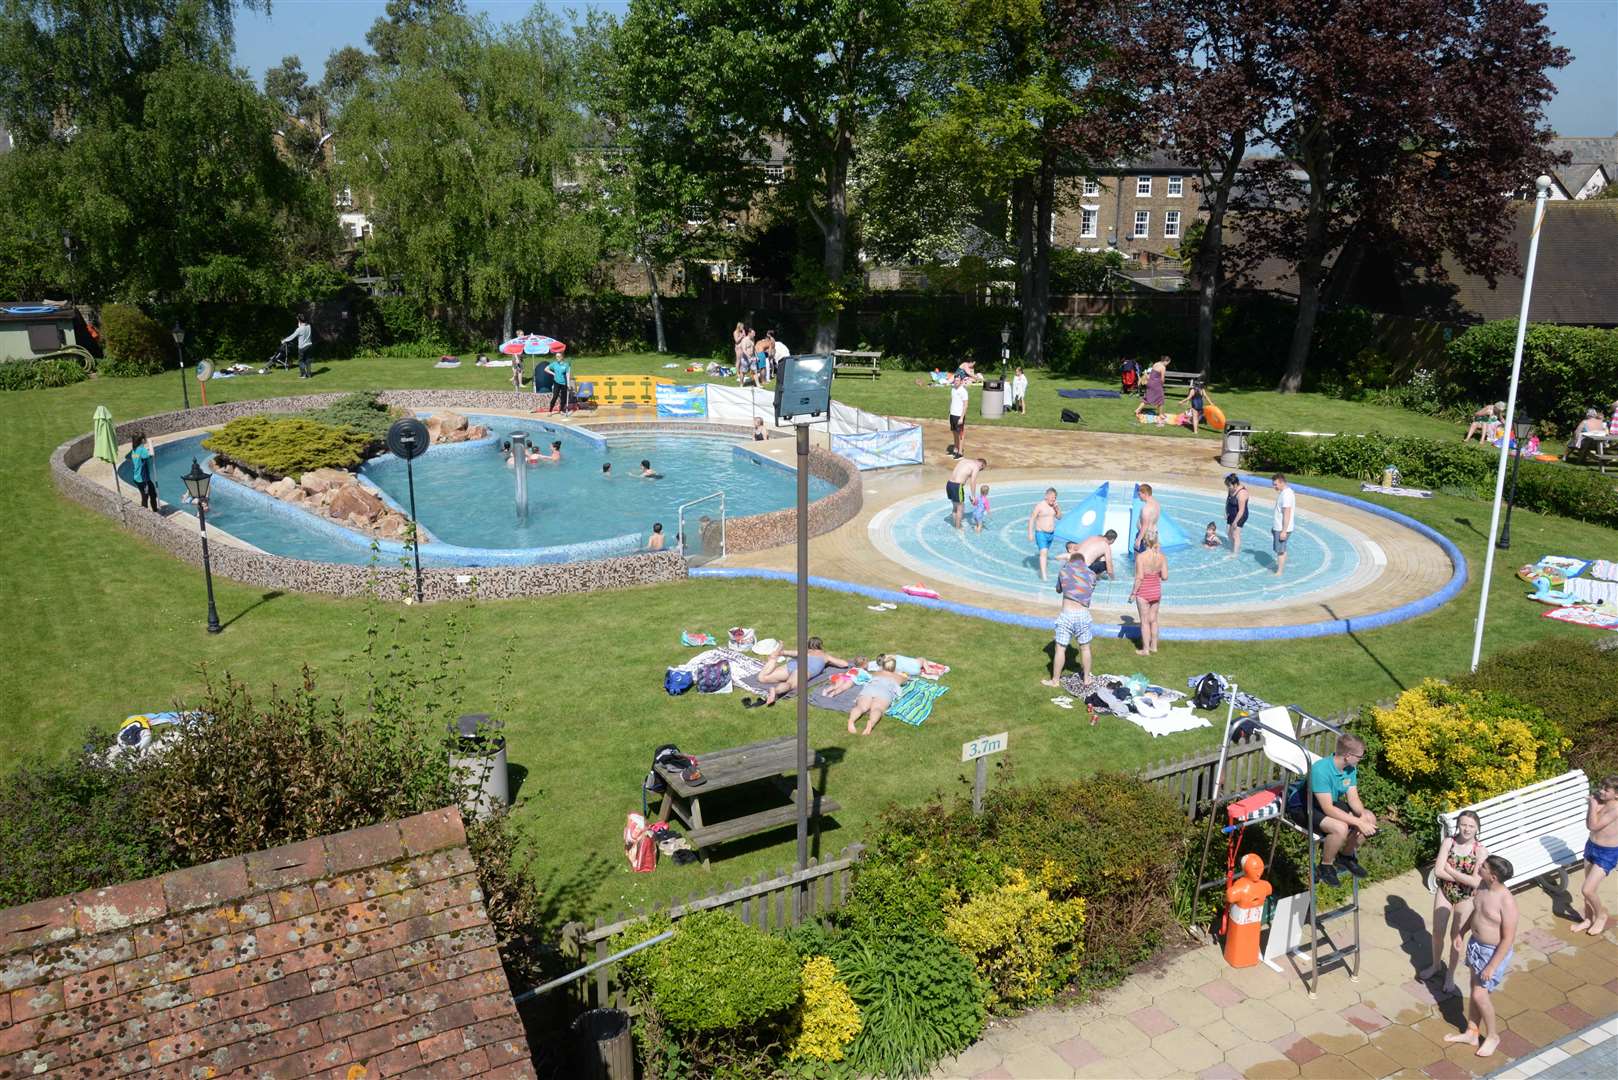 The fun pool and toddler pool at Faversham